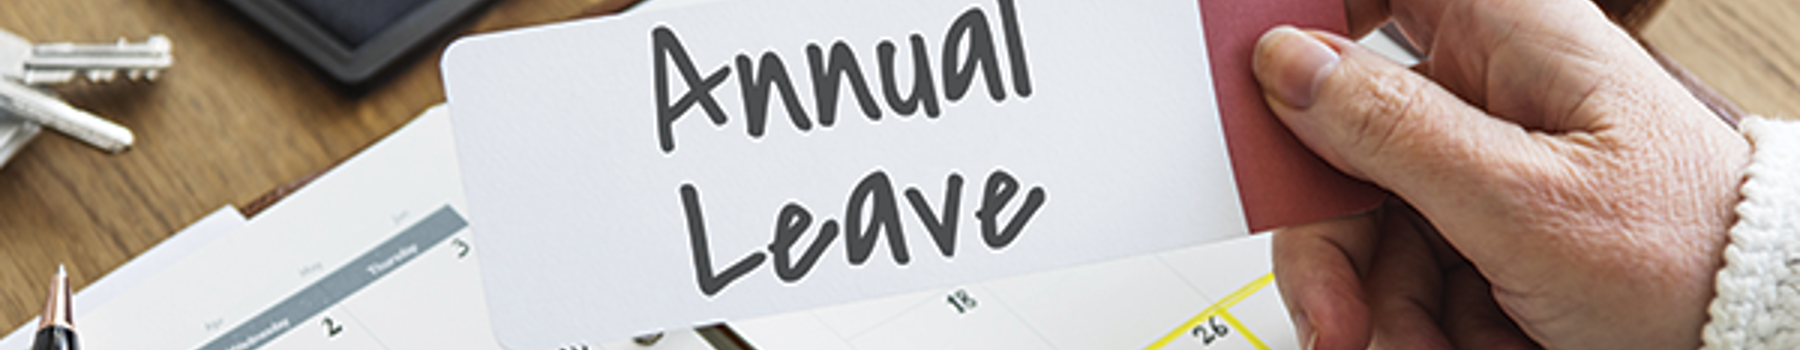 Legal Annual Leave (1)